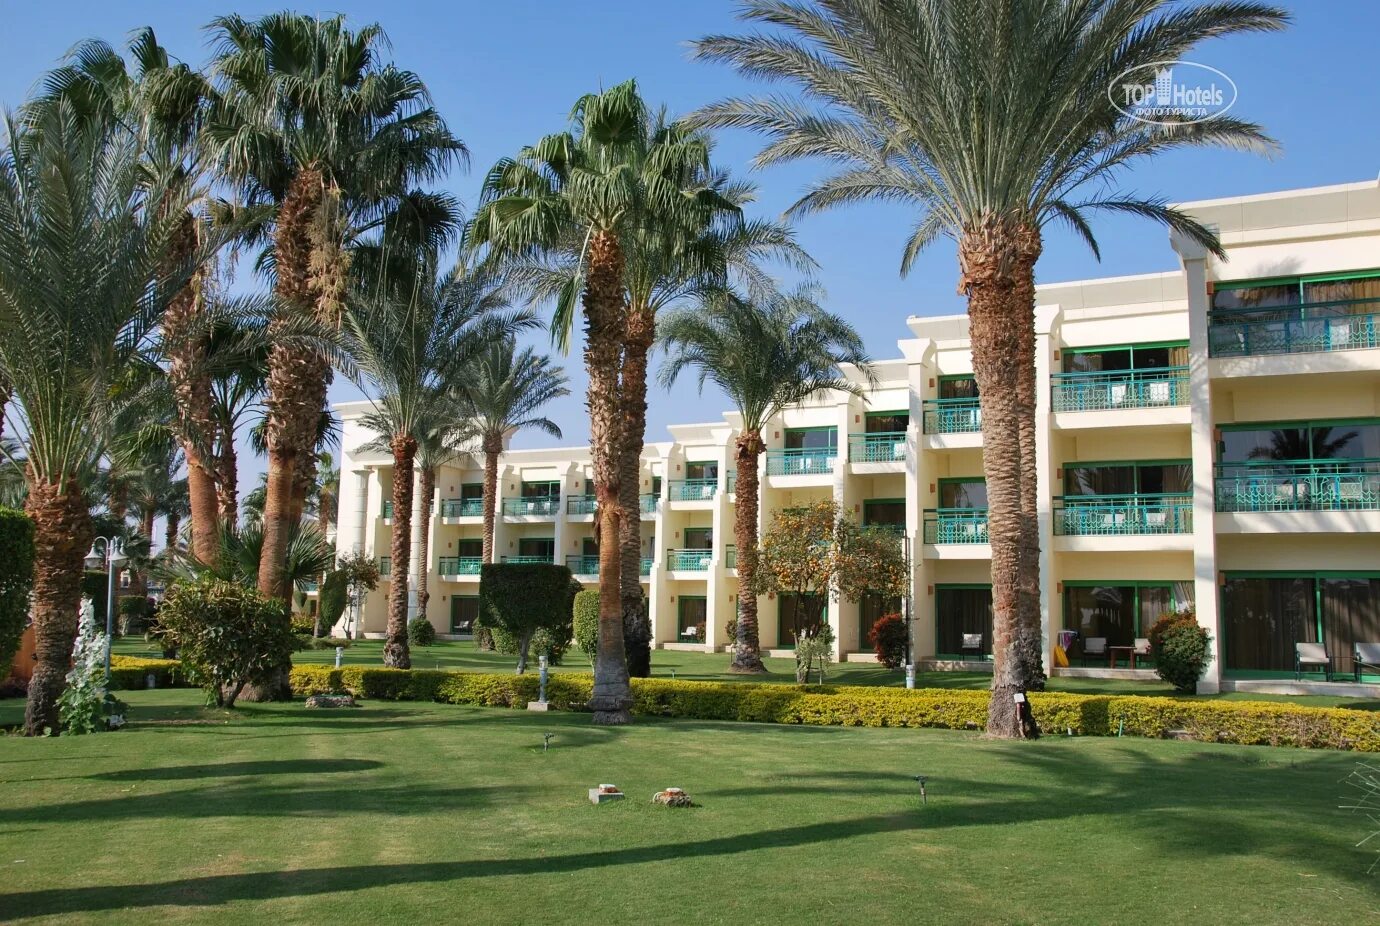 Swiss inn hurghada 5 хургада. Отель в Хургаде Swiss Inn Resort Hurghada.